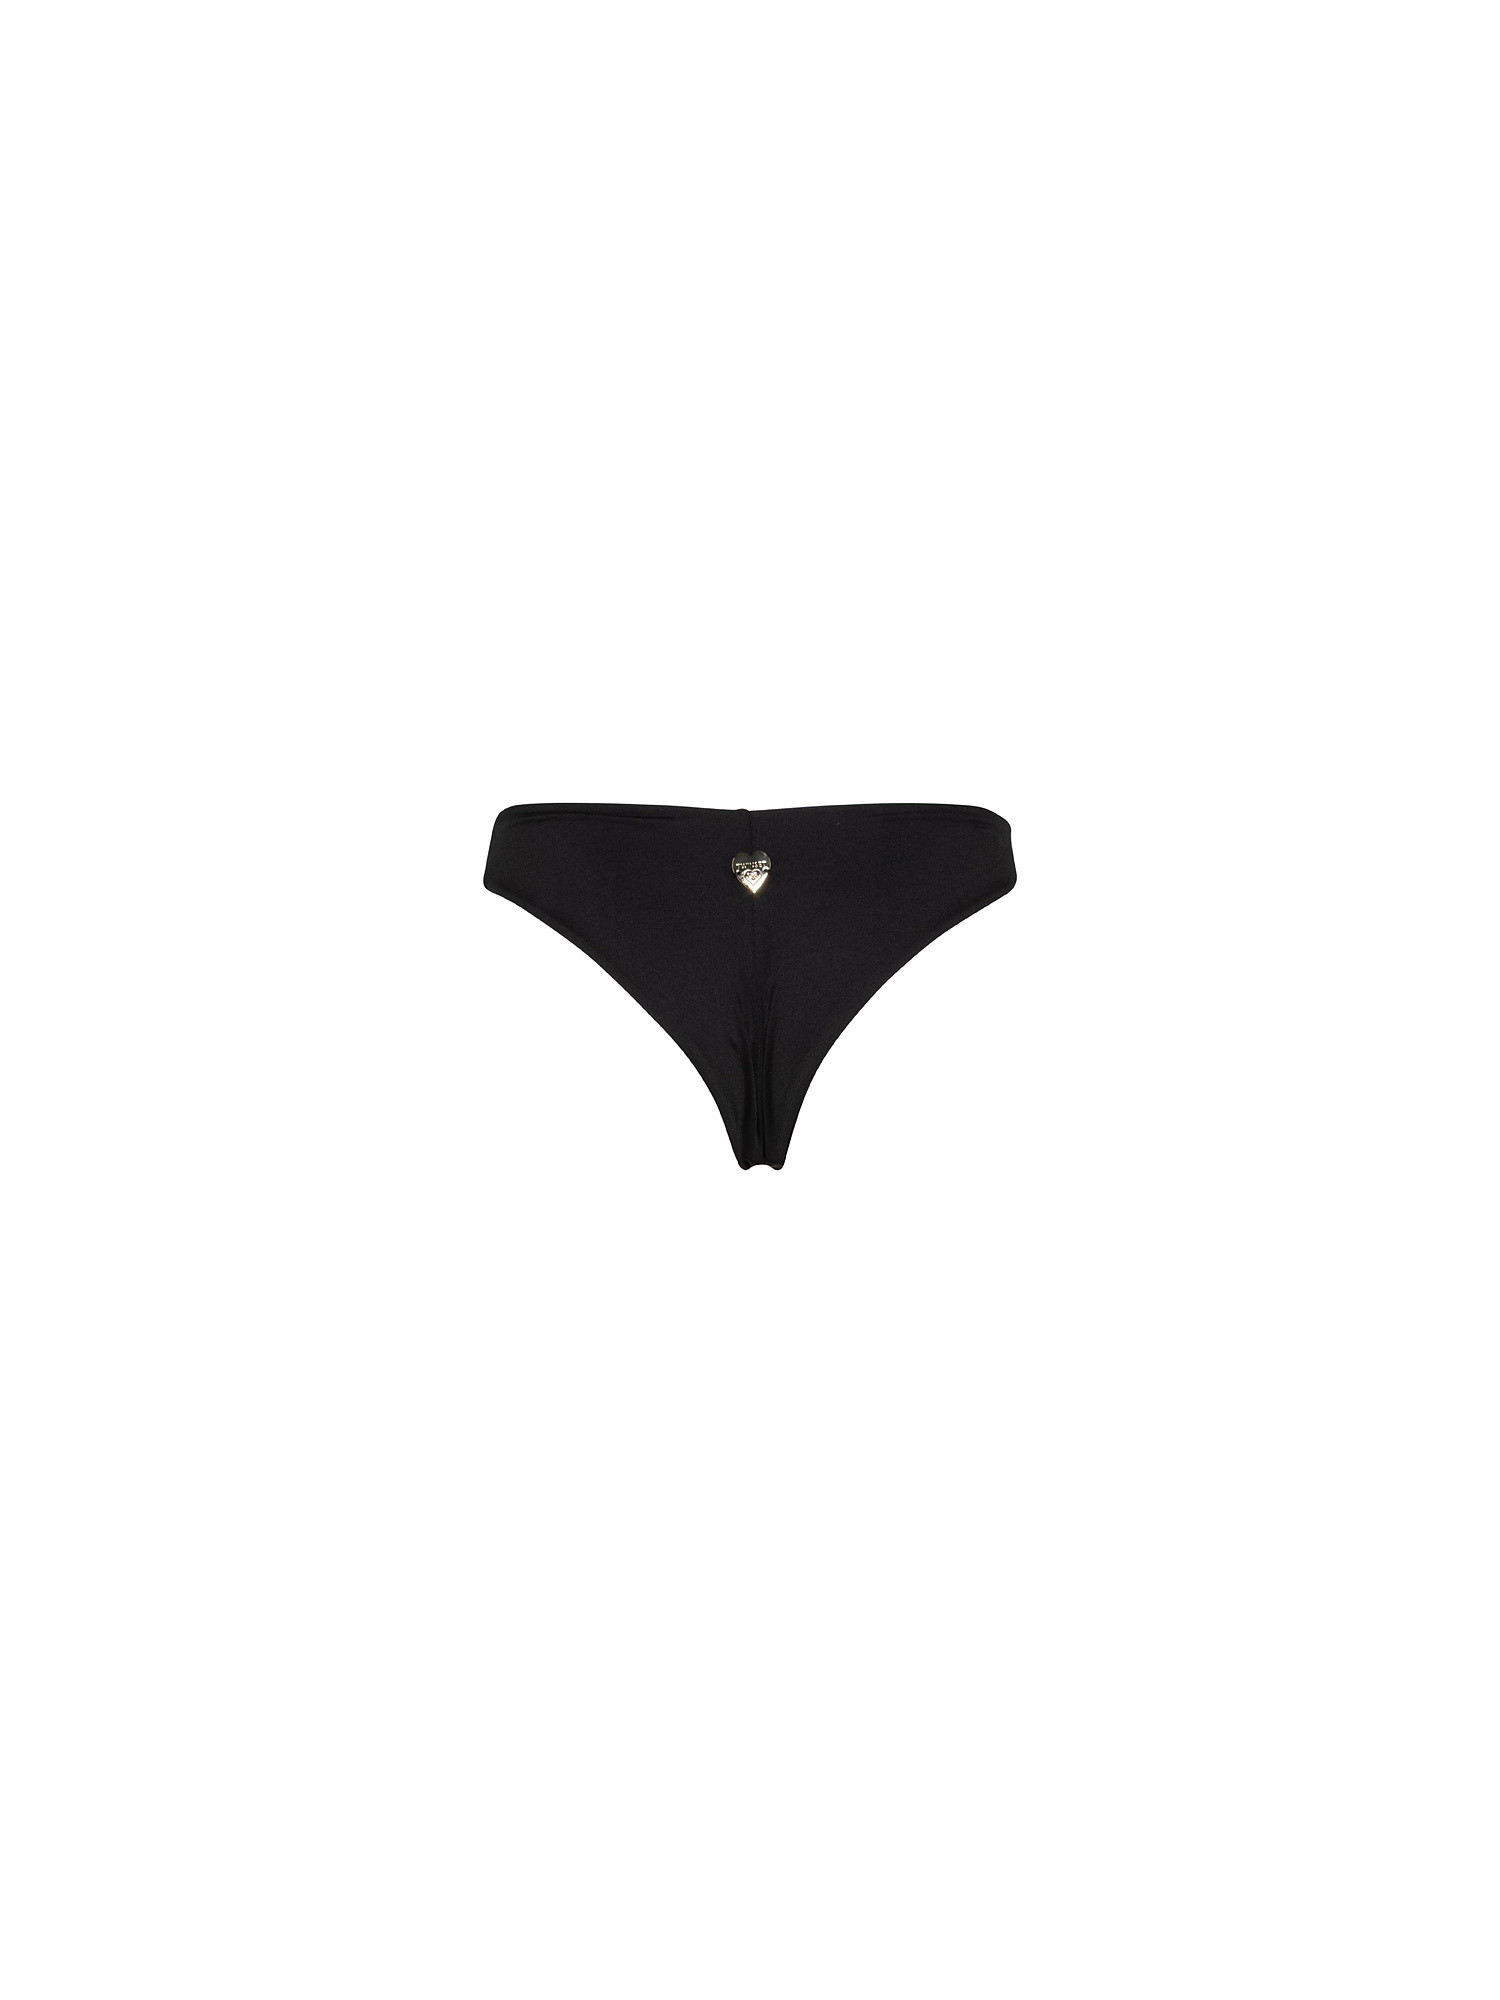 Bikini bottom brazilian brief, Black, large image number 1